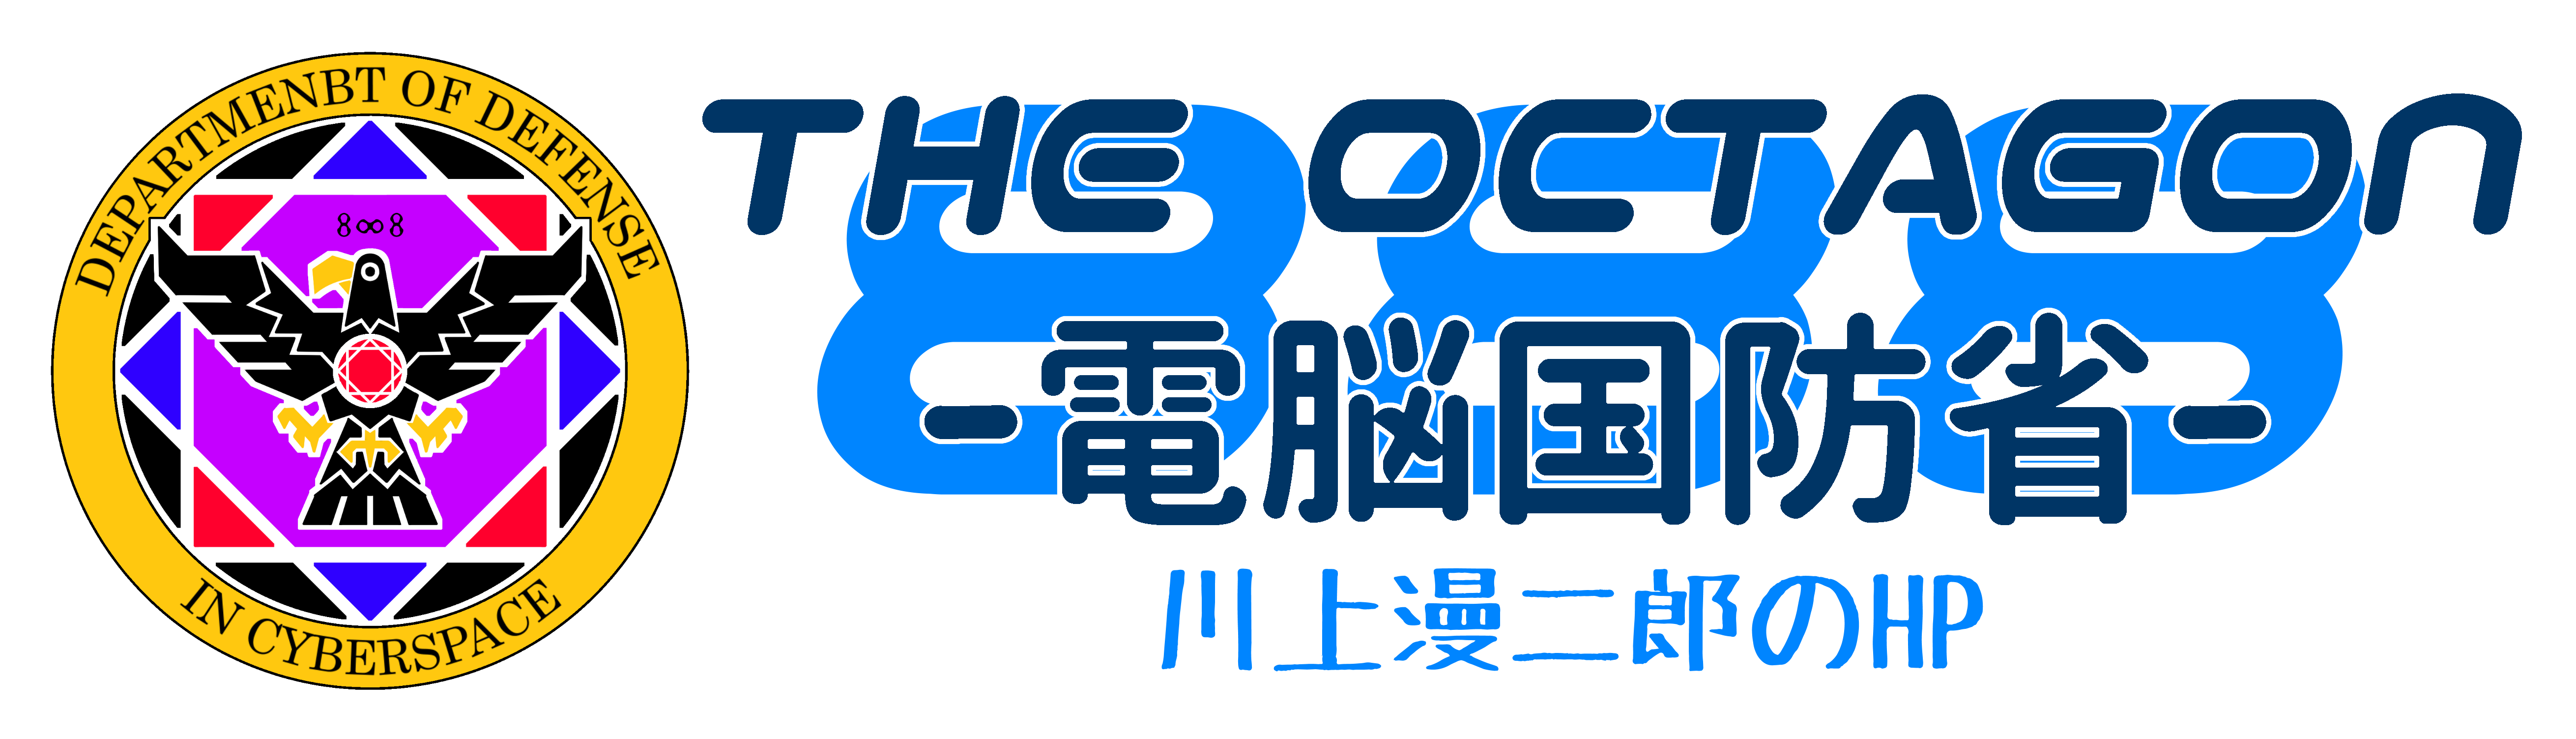 THE OCTAGON-電脳国防省-